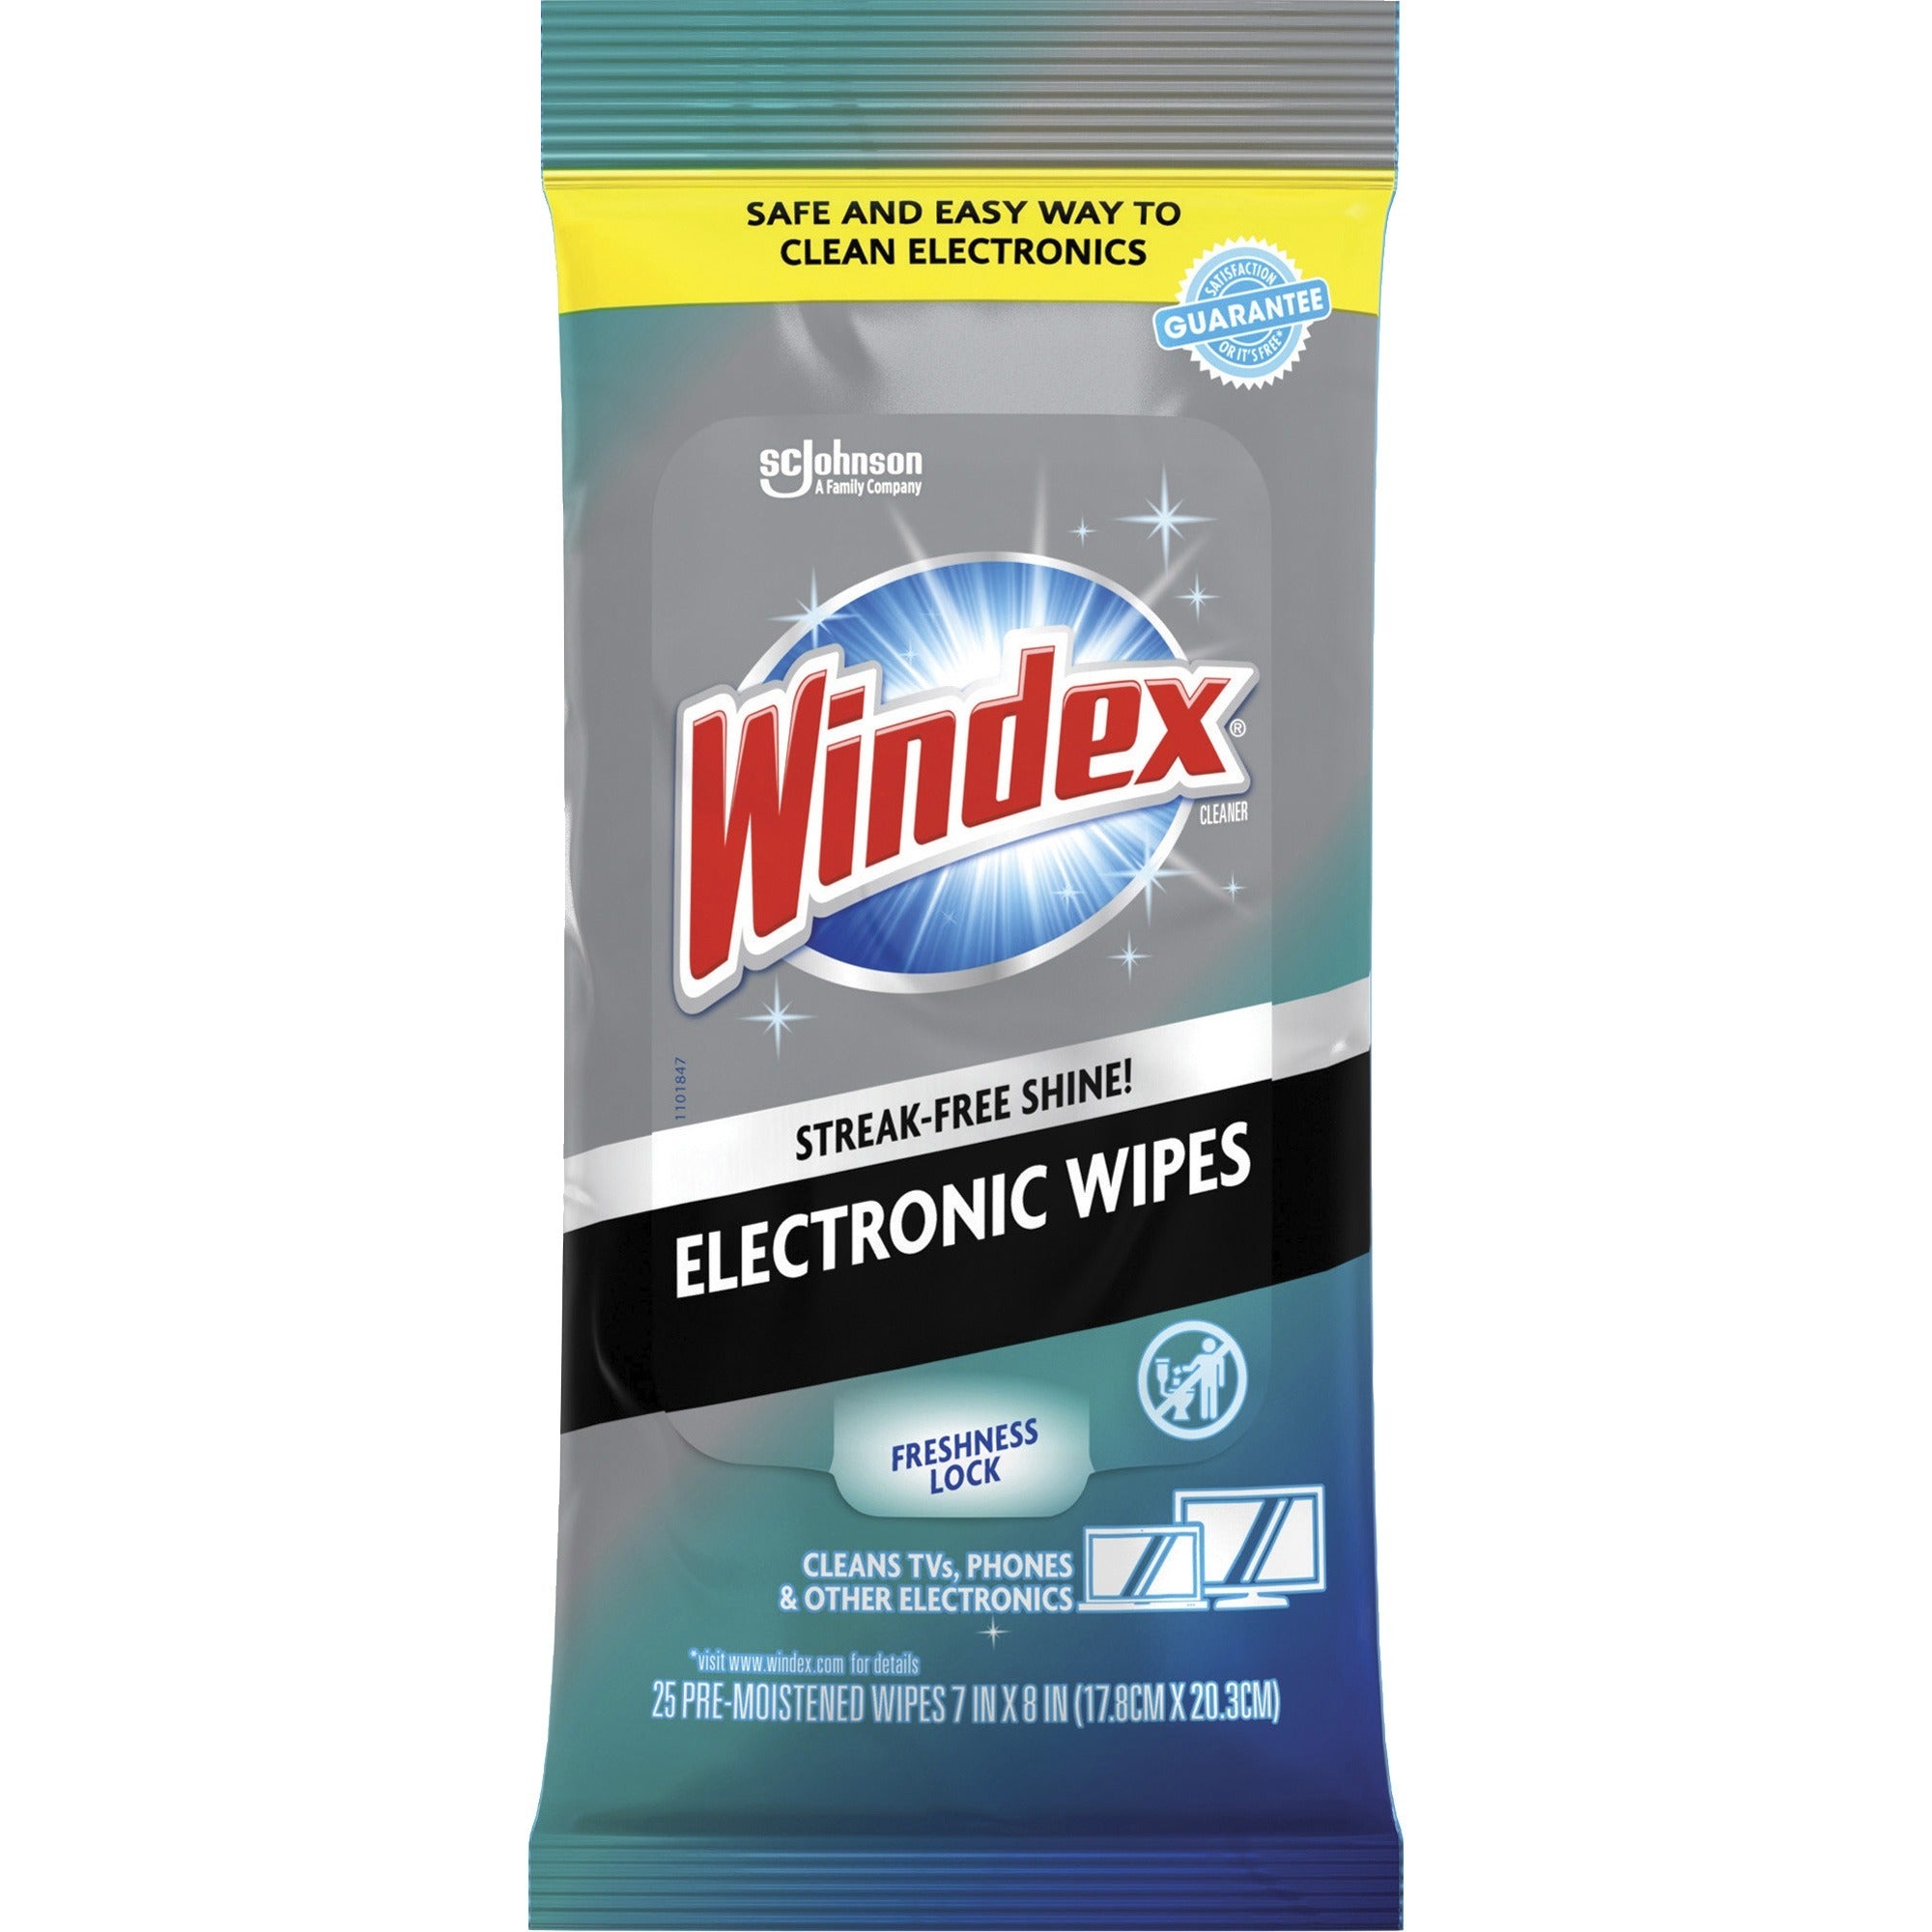 windex-electronic-wipes-for-multipurpose-multi-surface-non-drip-ammonia-free-pre-moistened-streak-free-residue-free-damage-resistant-25-pack-12-carton-white_sjn319248ct - 1